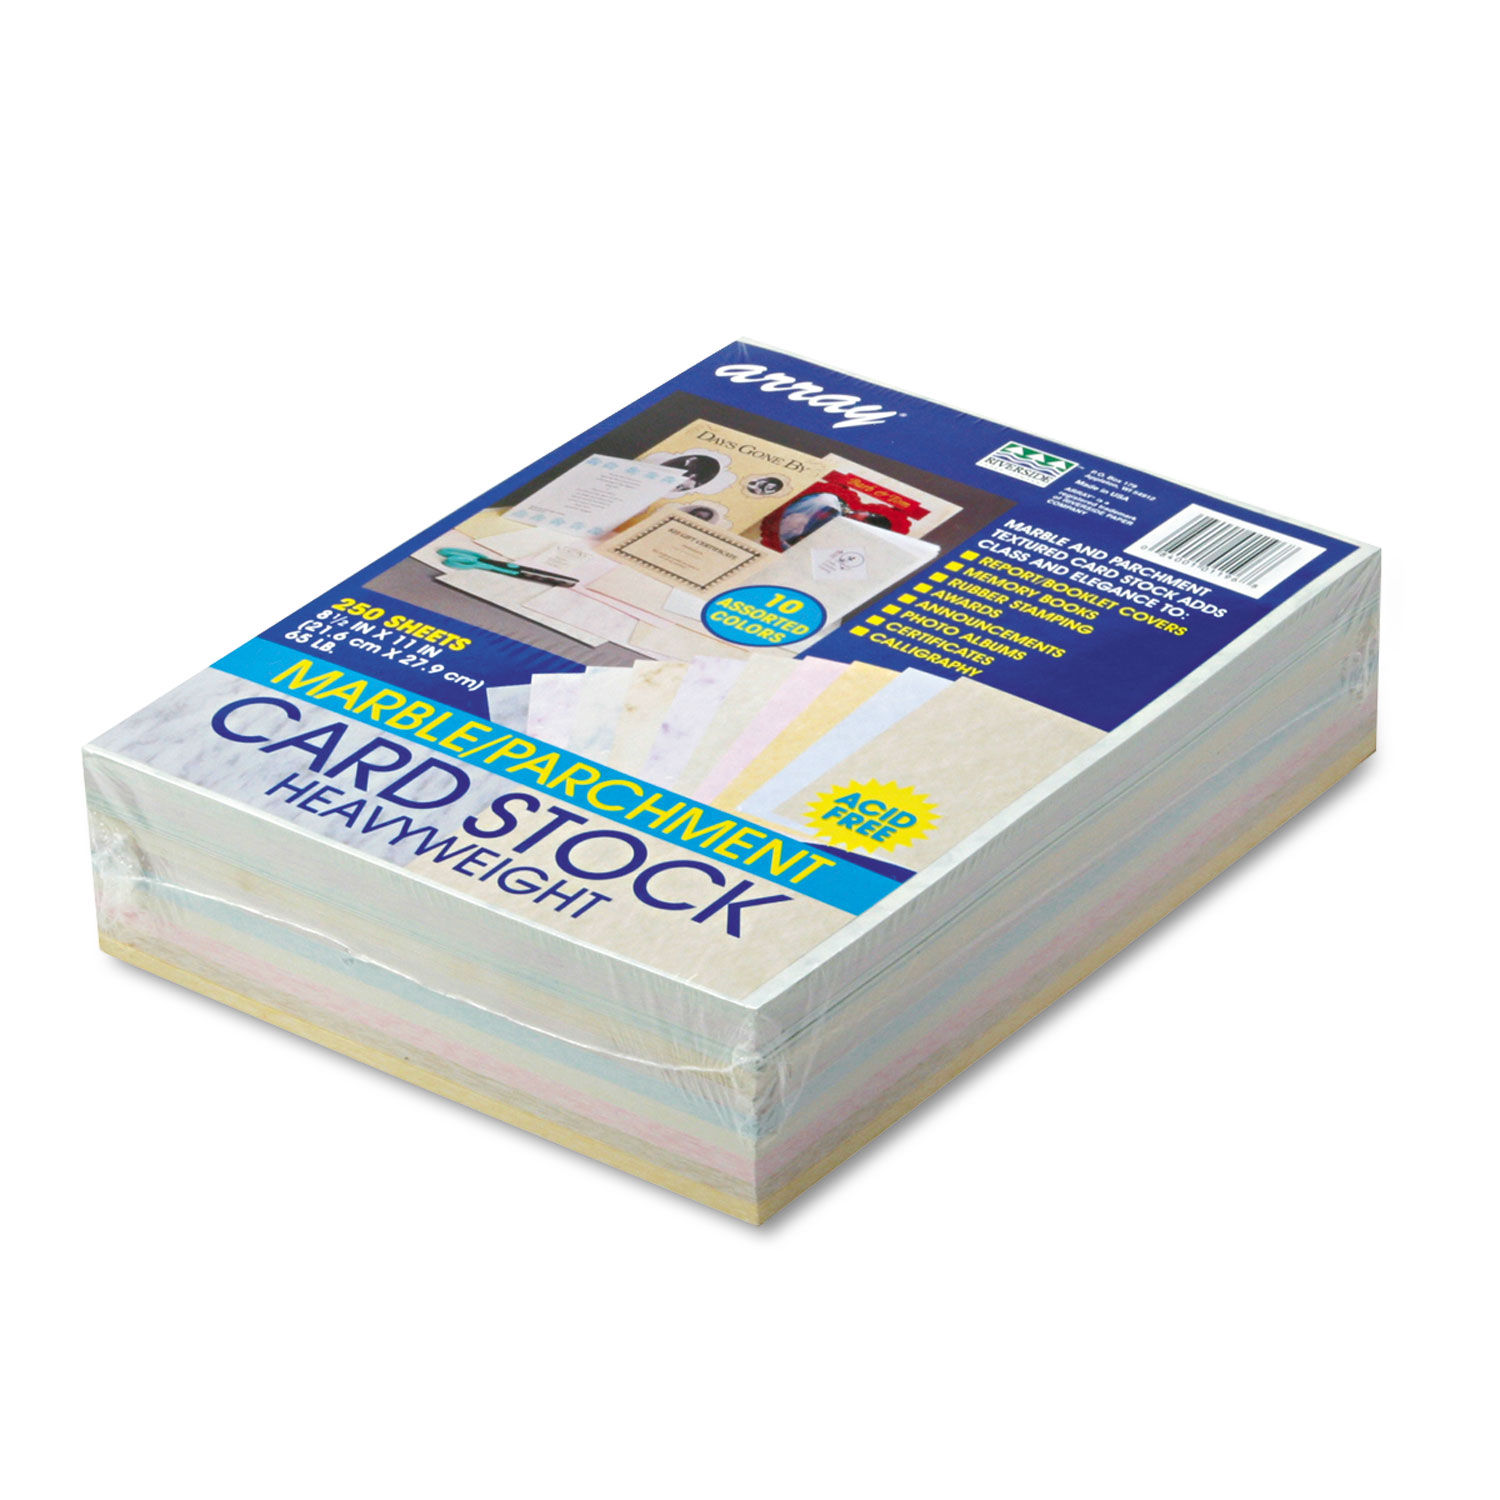 Hammermill Premium Color Copy Cover 80lb Cardstock, 8.5 x 11, 1 Pack, 250  Sh